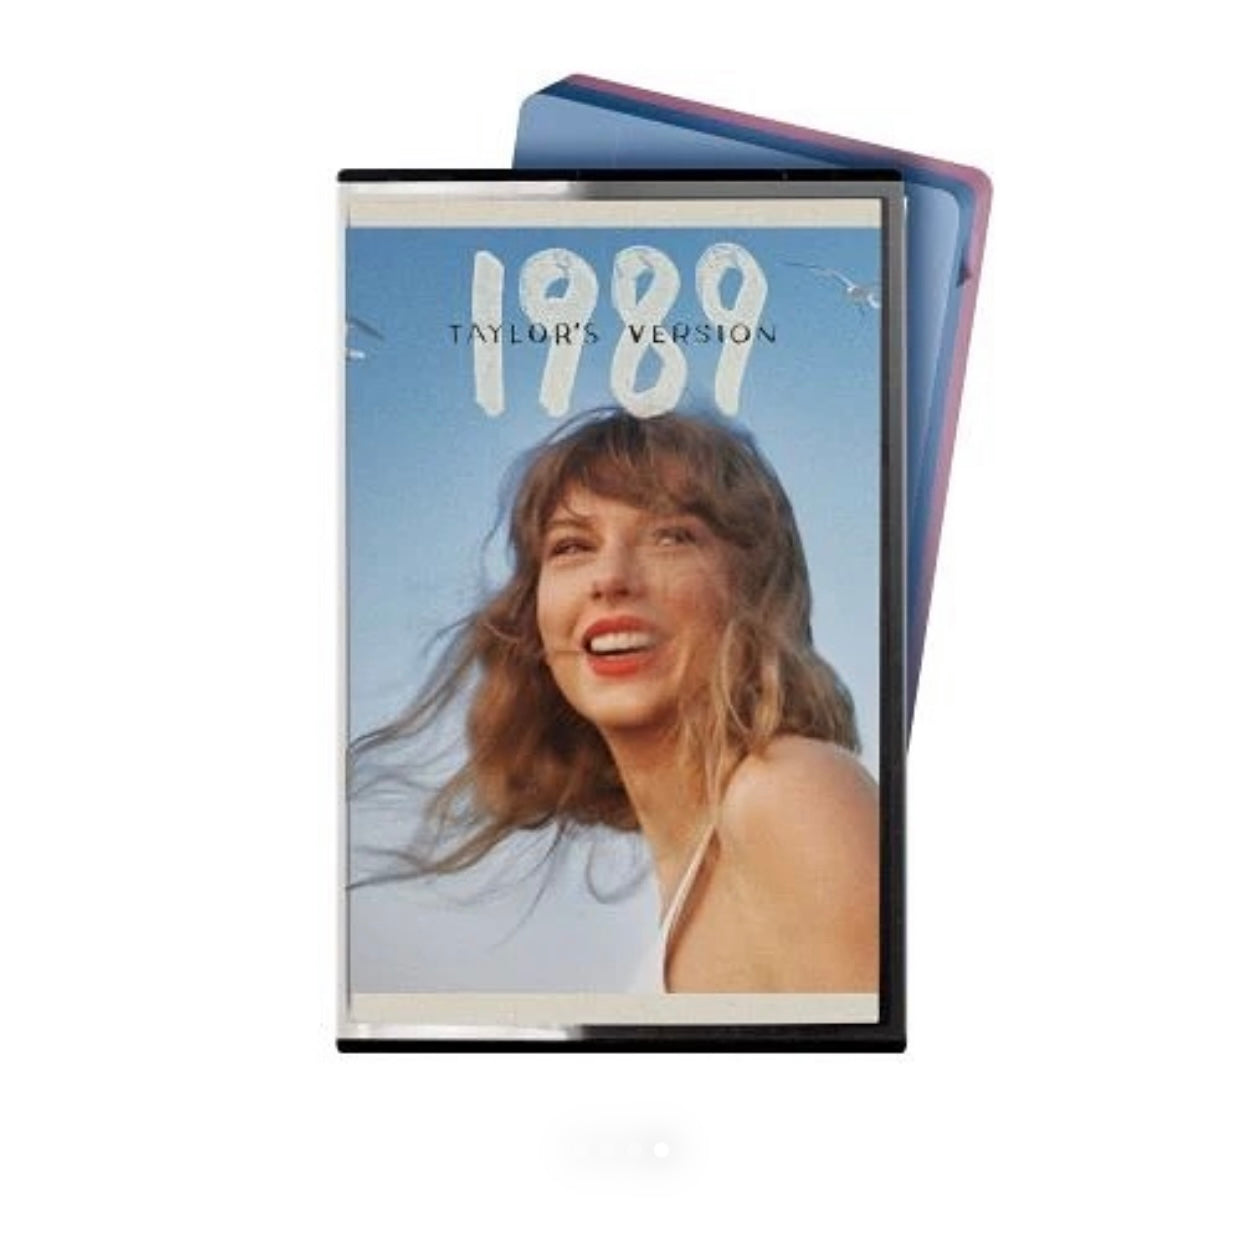 Taylor Swift - 1989 (Taylor's Version) (Cassette)